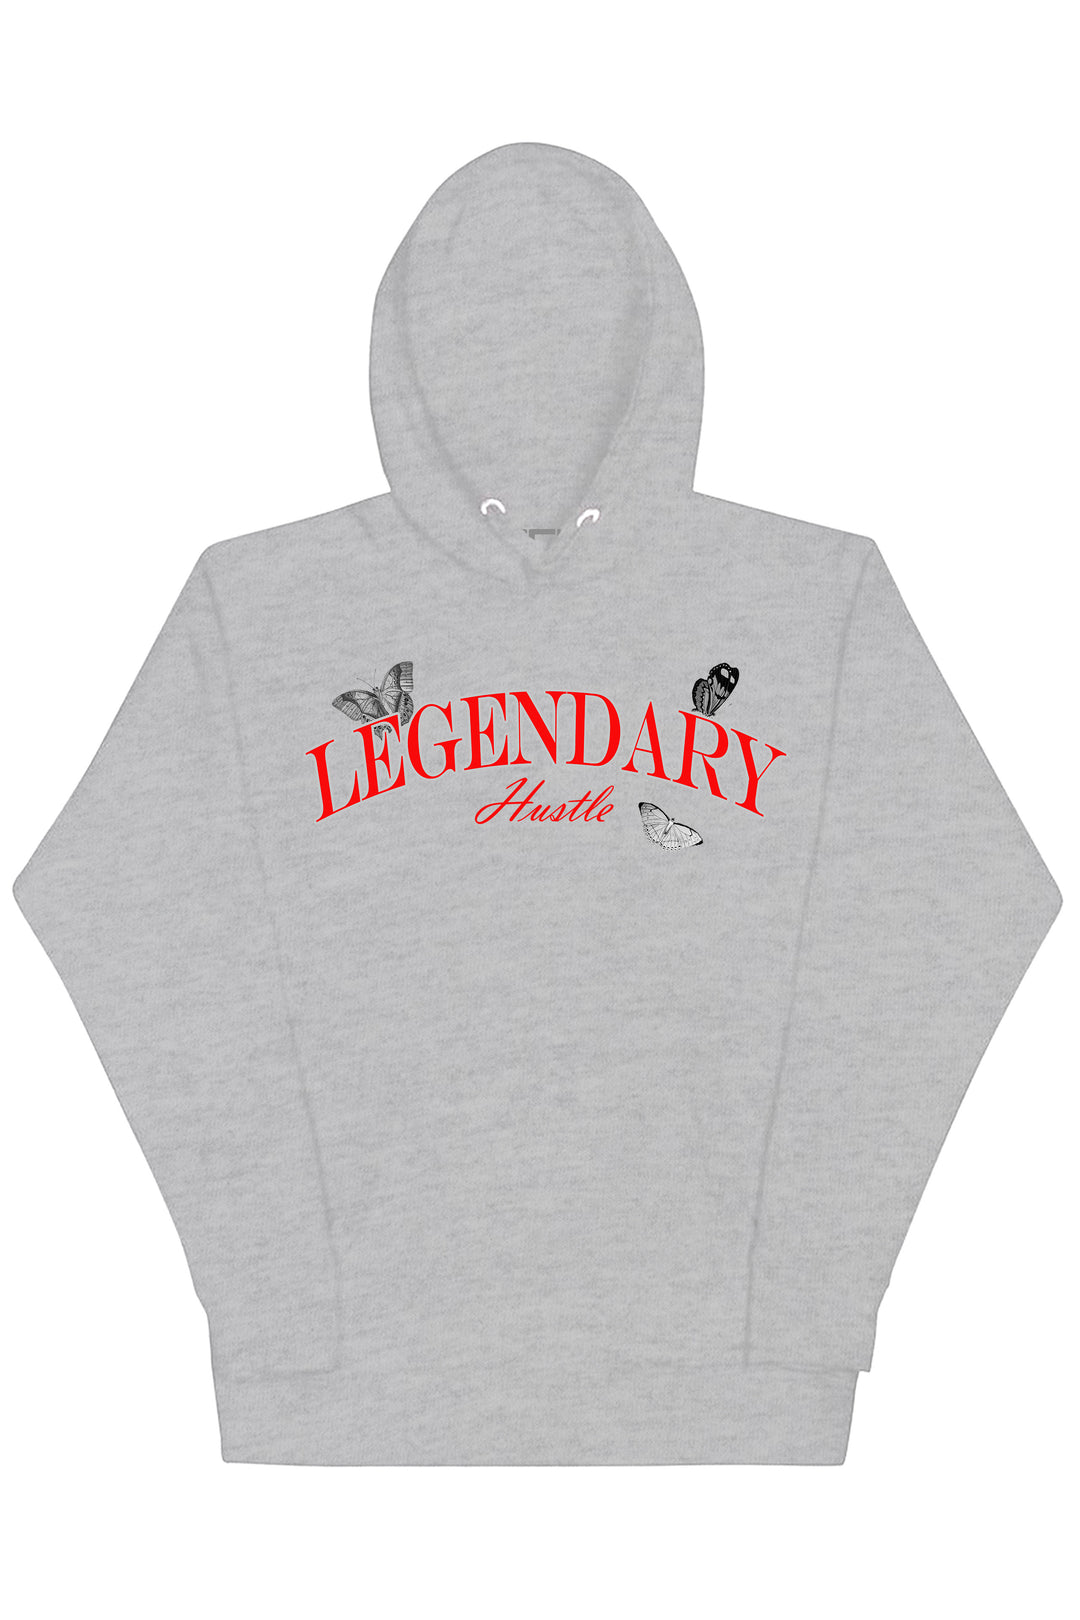 Legendary Hoodie (Red - Grey Logo) - Zamage